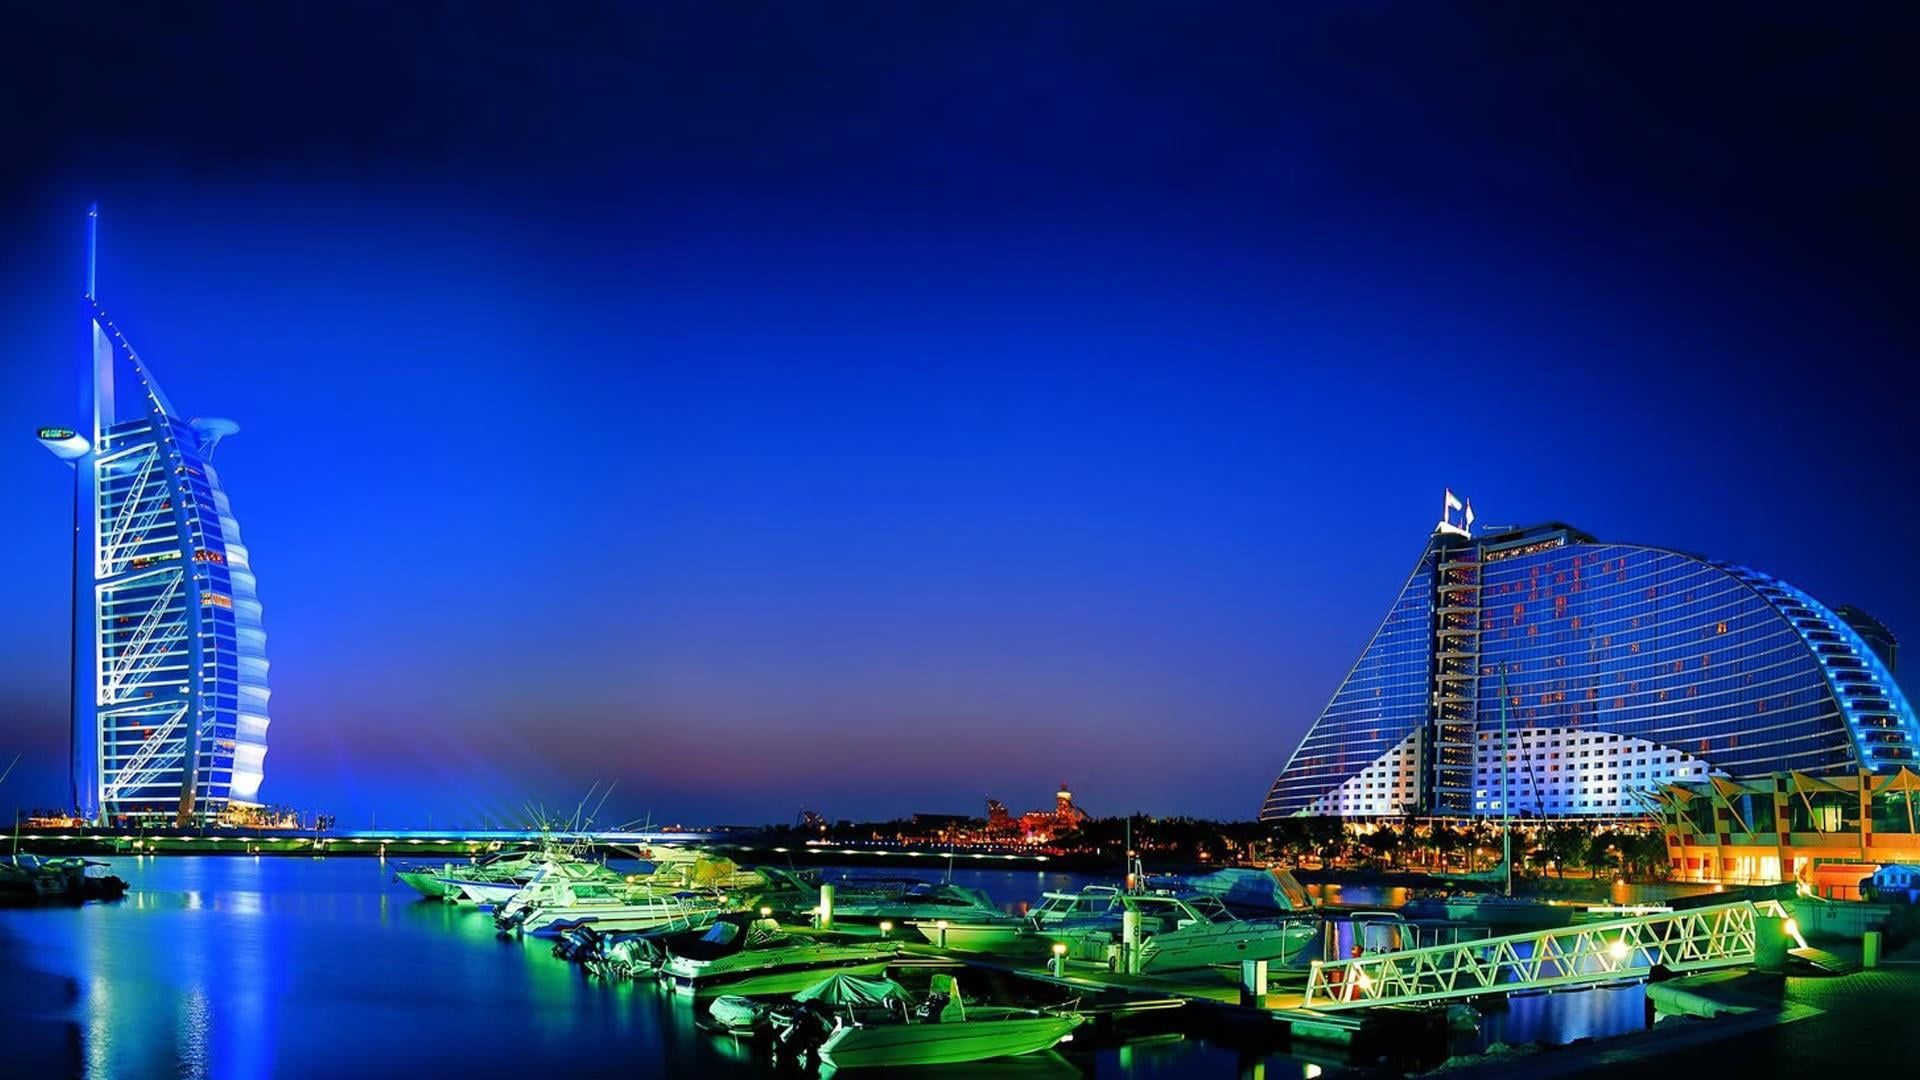  Dubai Hintergrundbild 1920x1080. Dubai Wallpaper, Night Sky, Cityscape, Skyscraper, City Lights, Bay, Boats